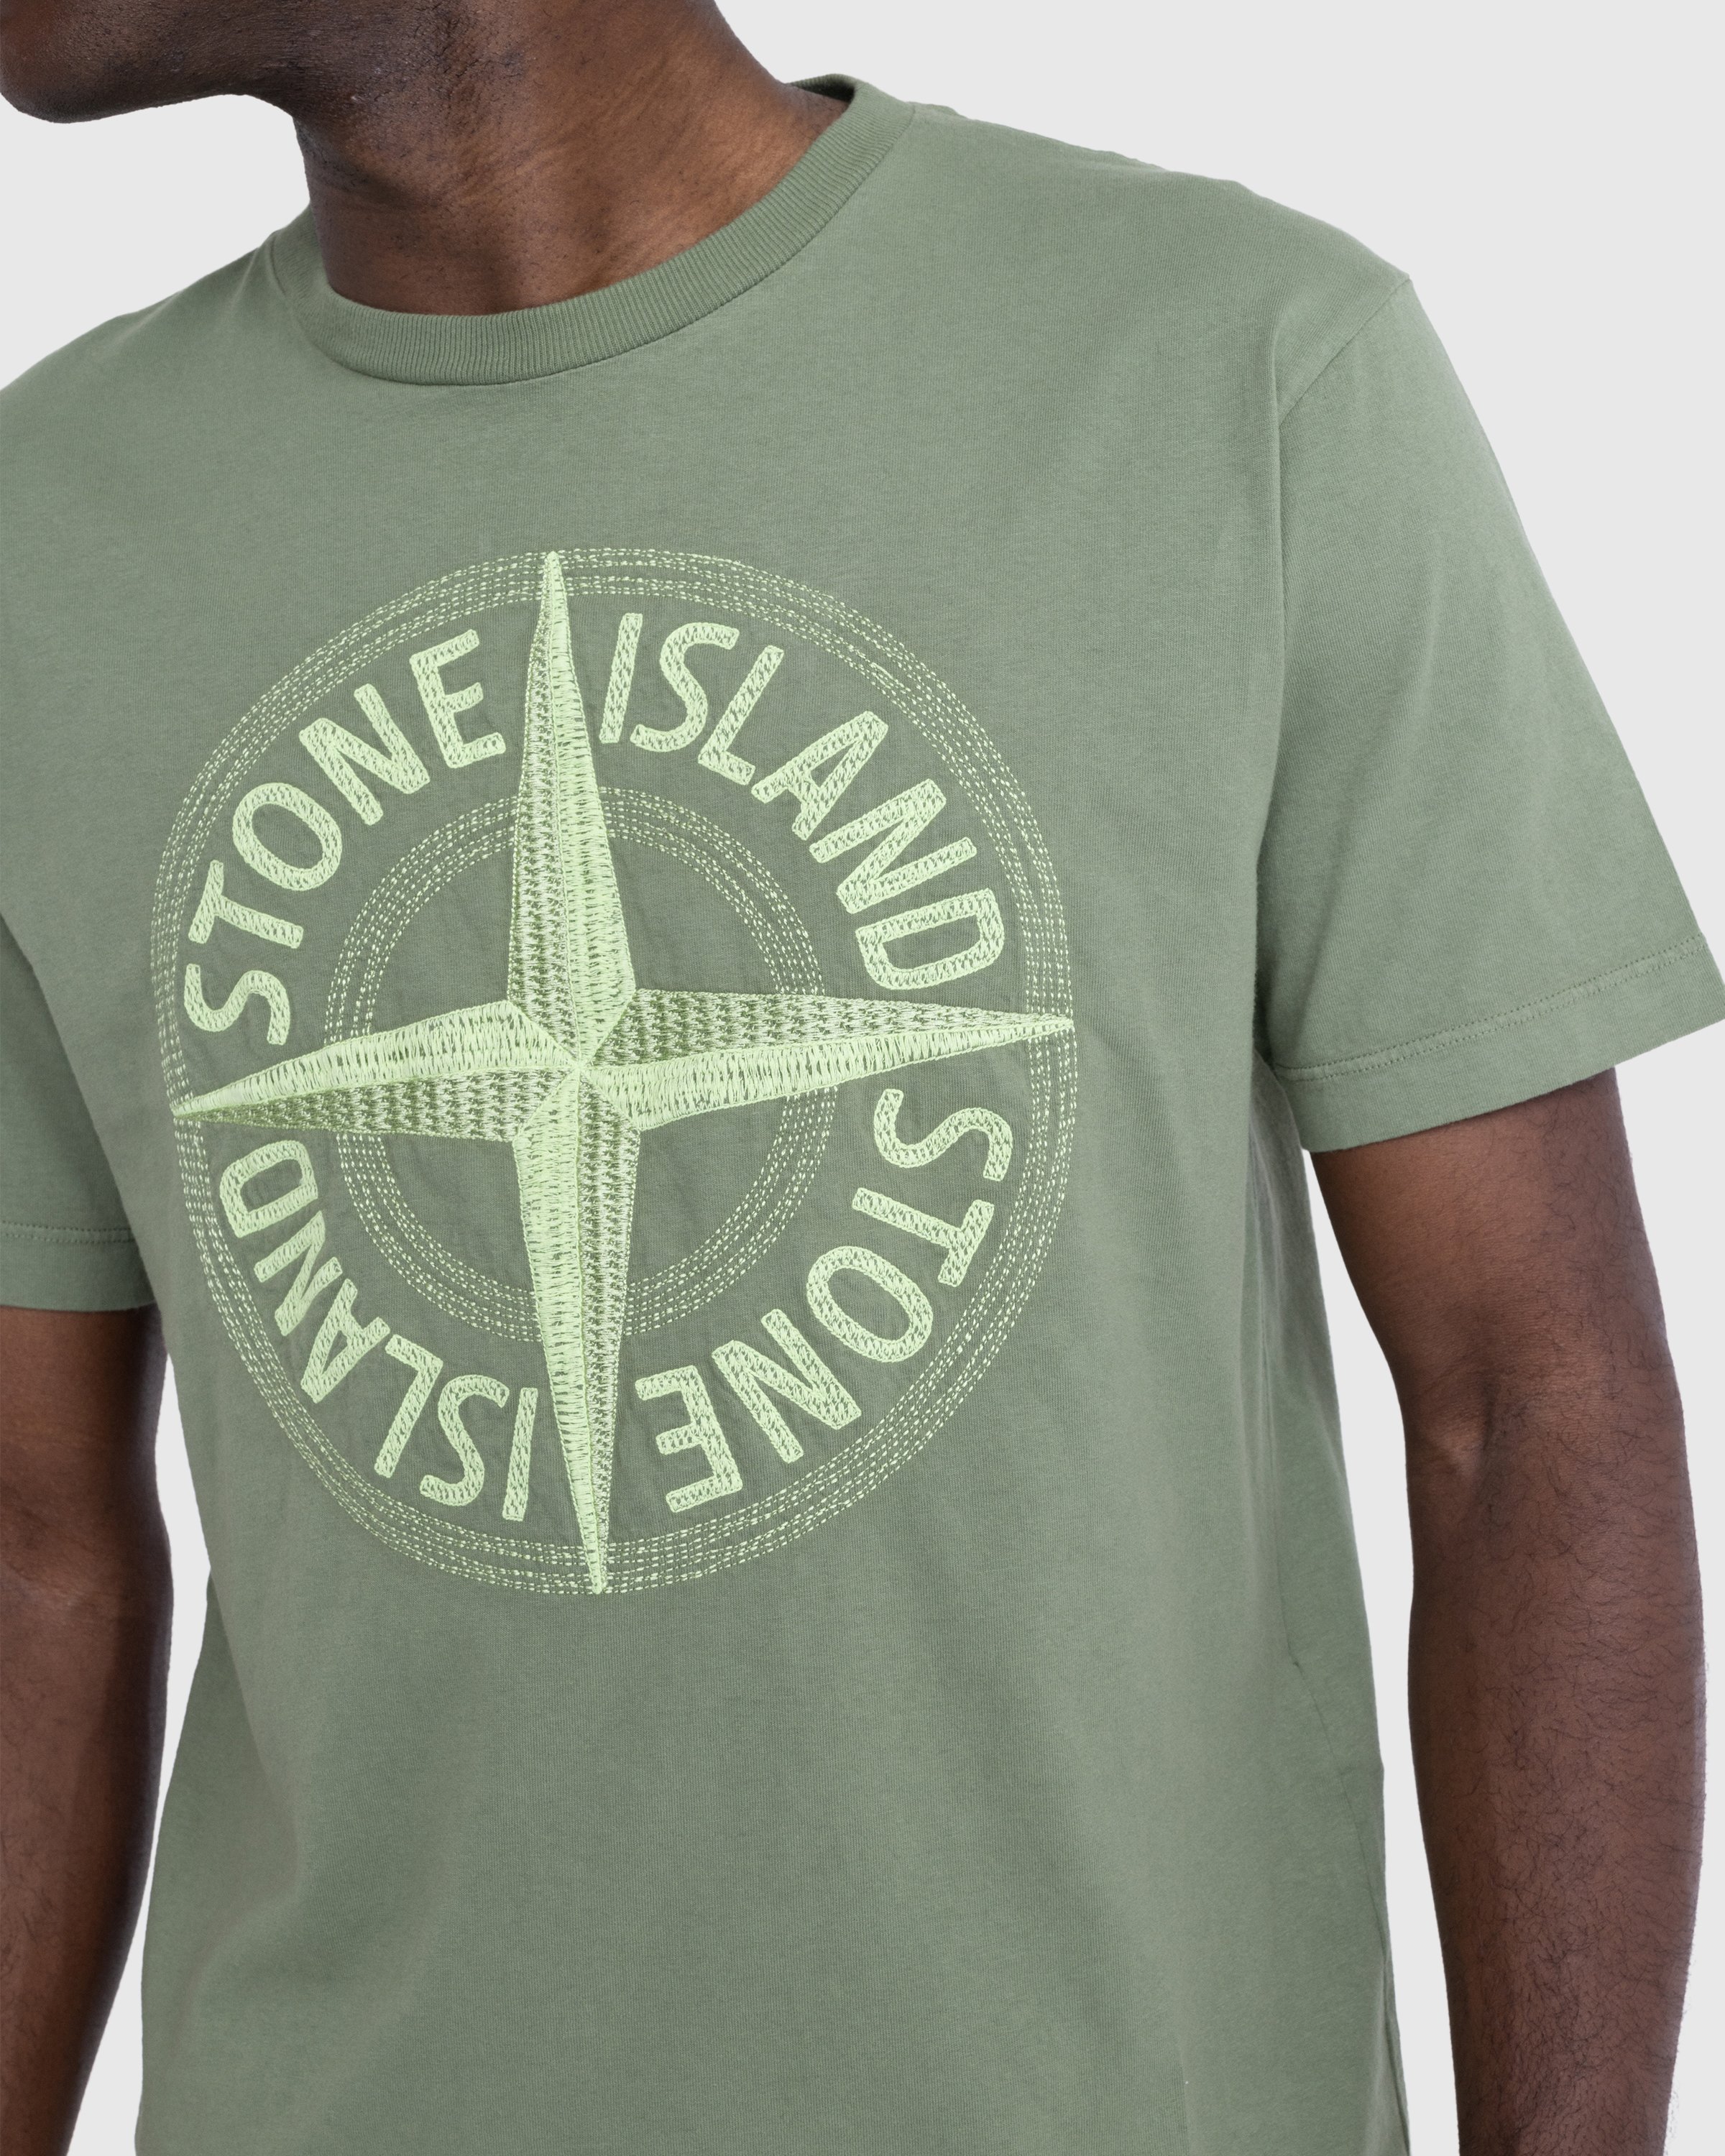 Stone Island - T-Shirt Green 21580 - Clothing - Green - Image 4